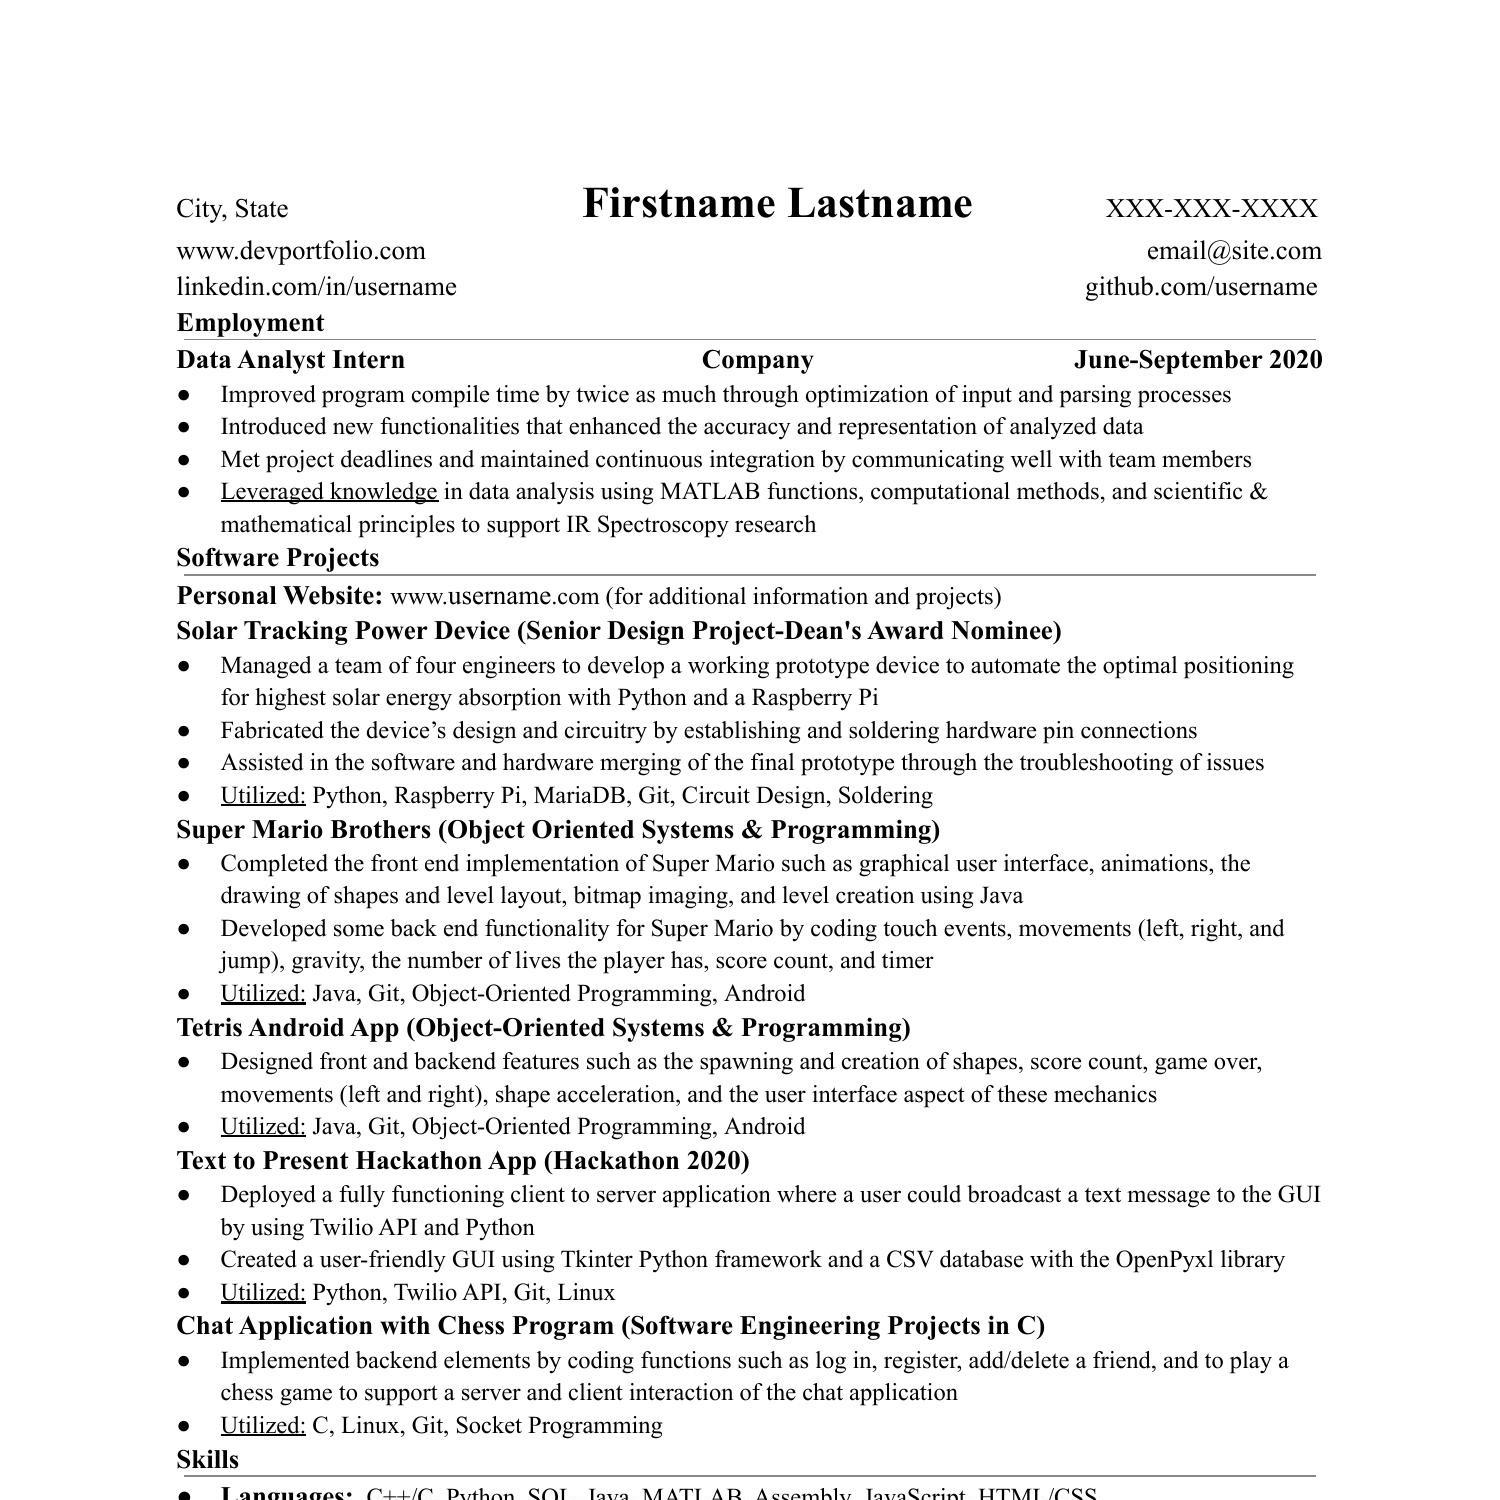 linkedin resume review reddit